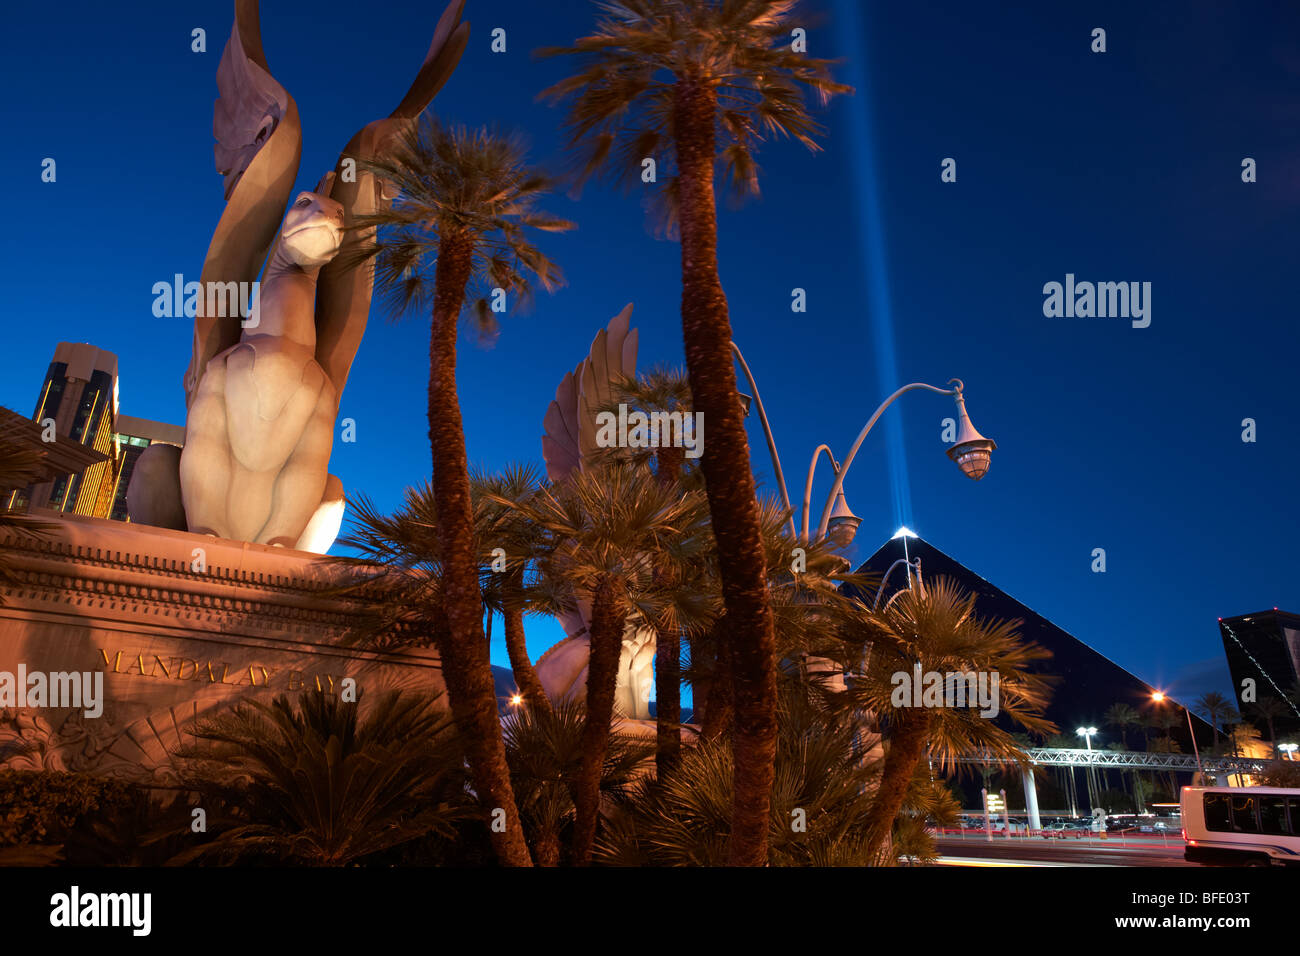 Mandalay Bay Hotel famoso Casino - Las Vegas Boulevard - la striscia Foto Stock